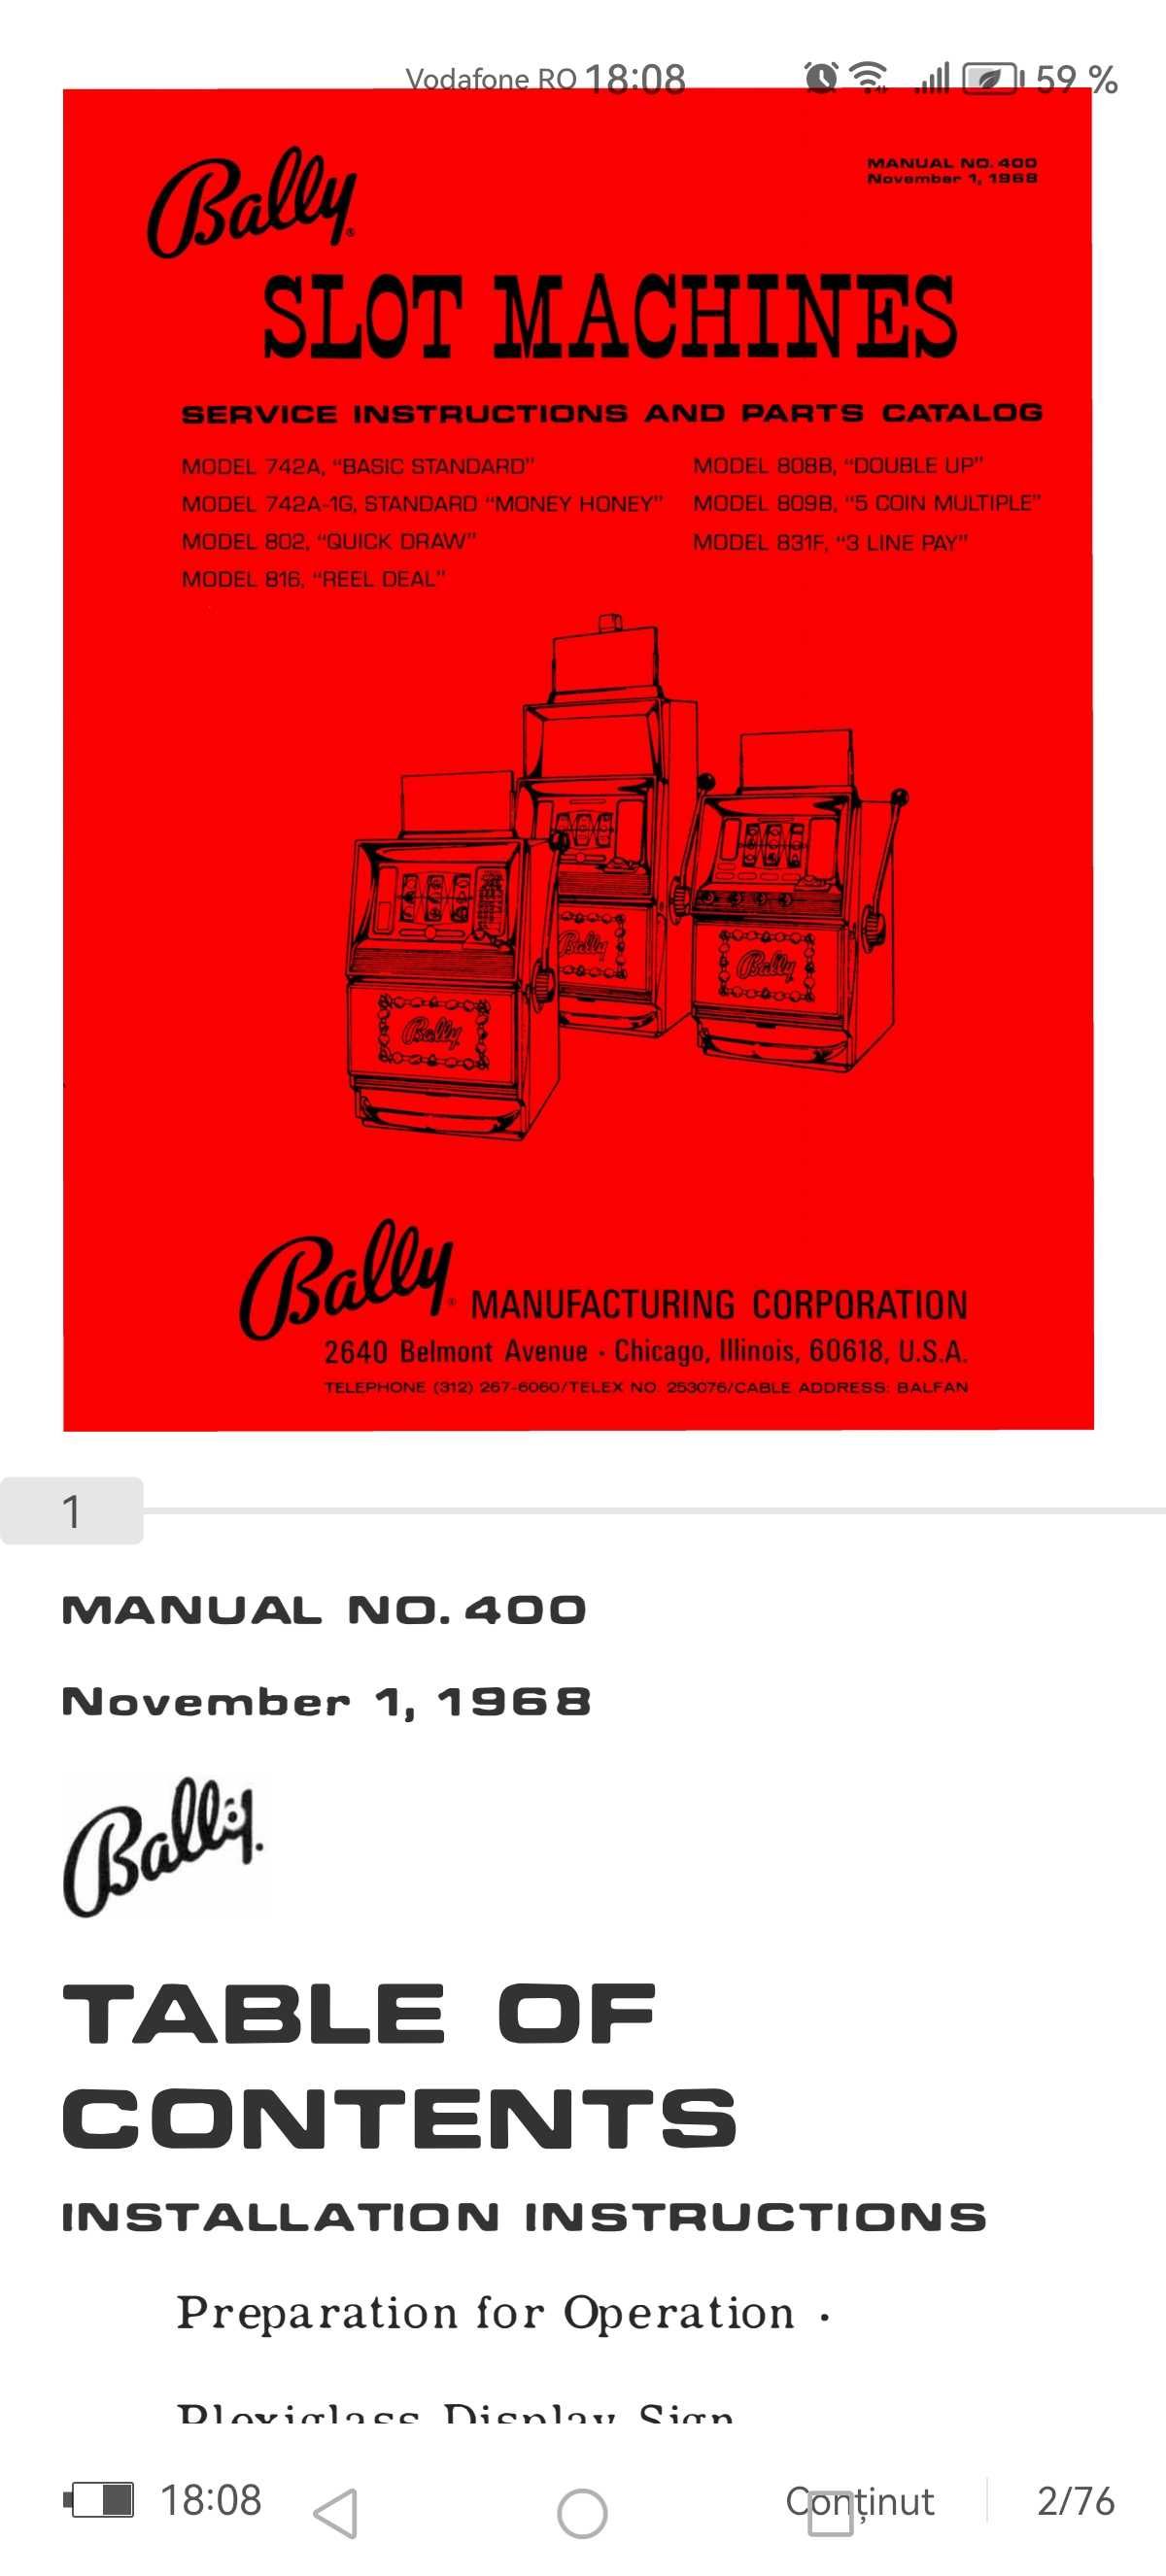 Manual Complect Service BALLY SLOT MACHINE serie E 1980-1986